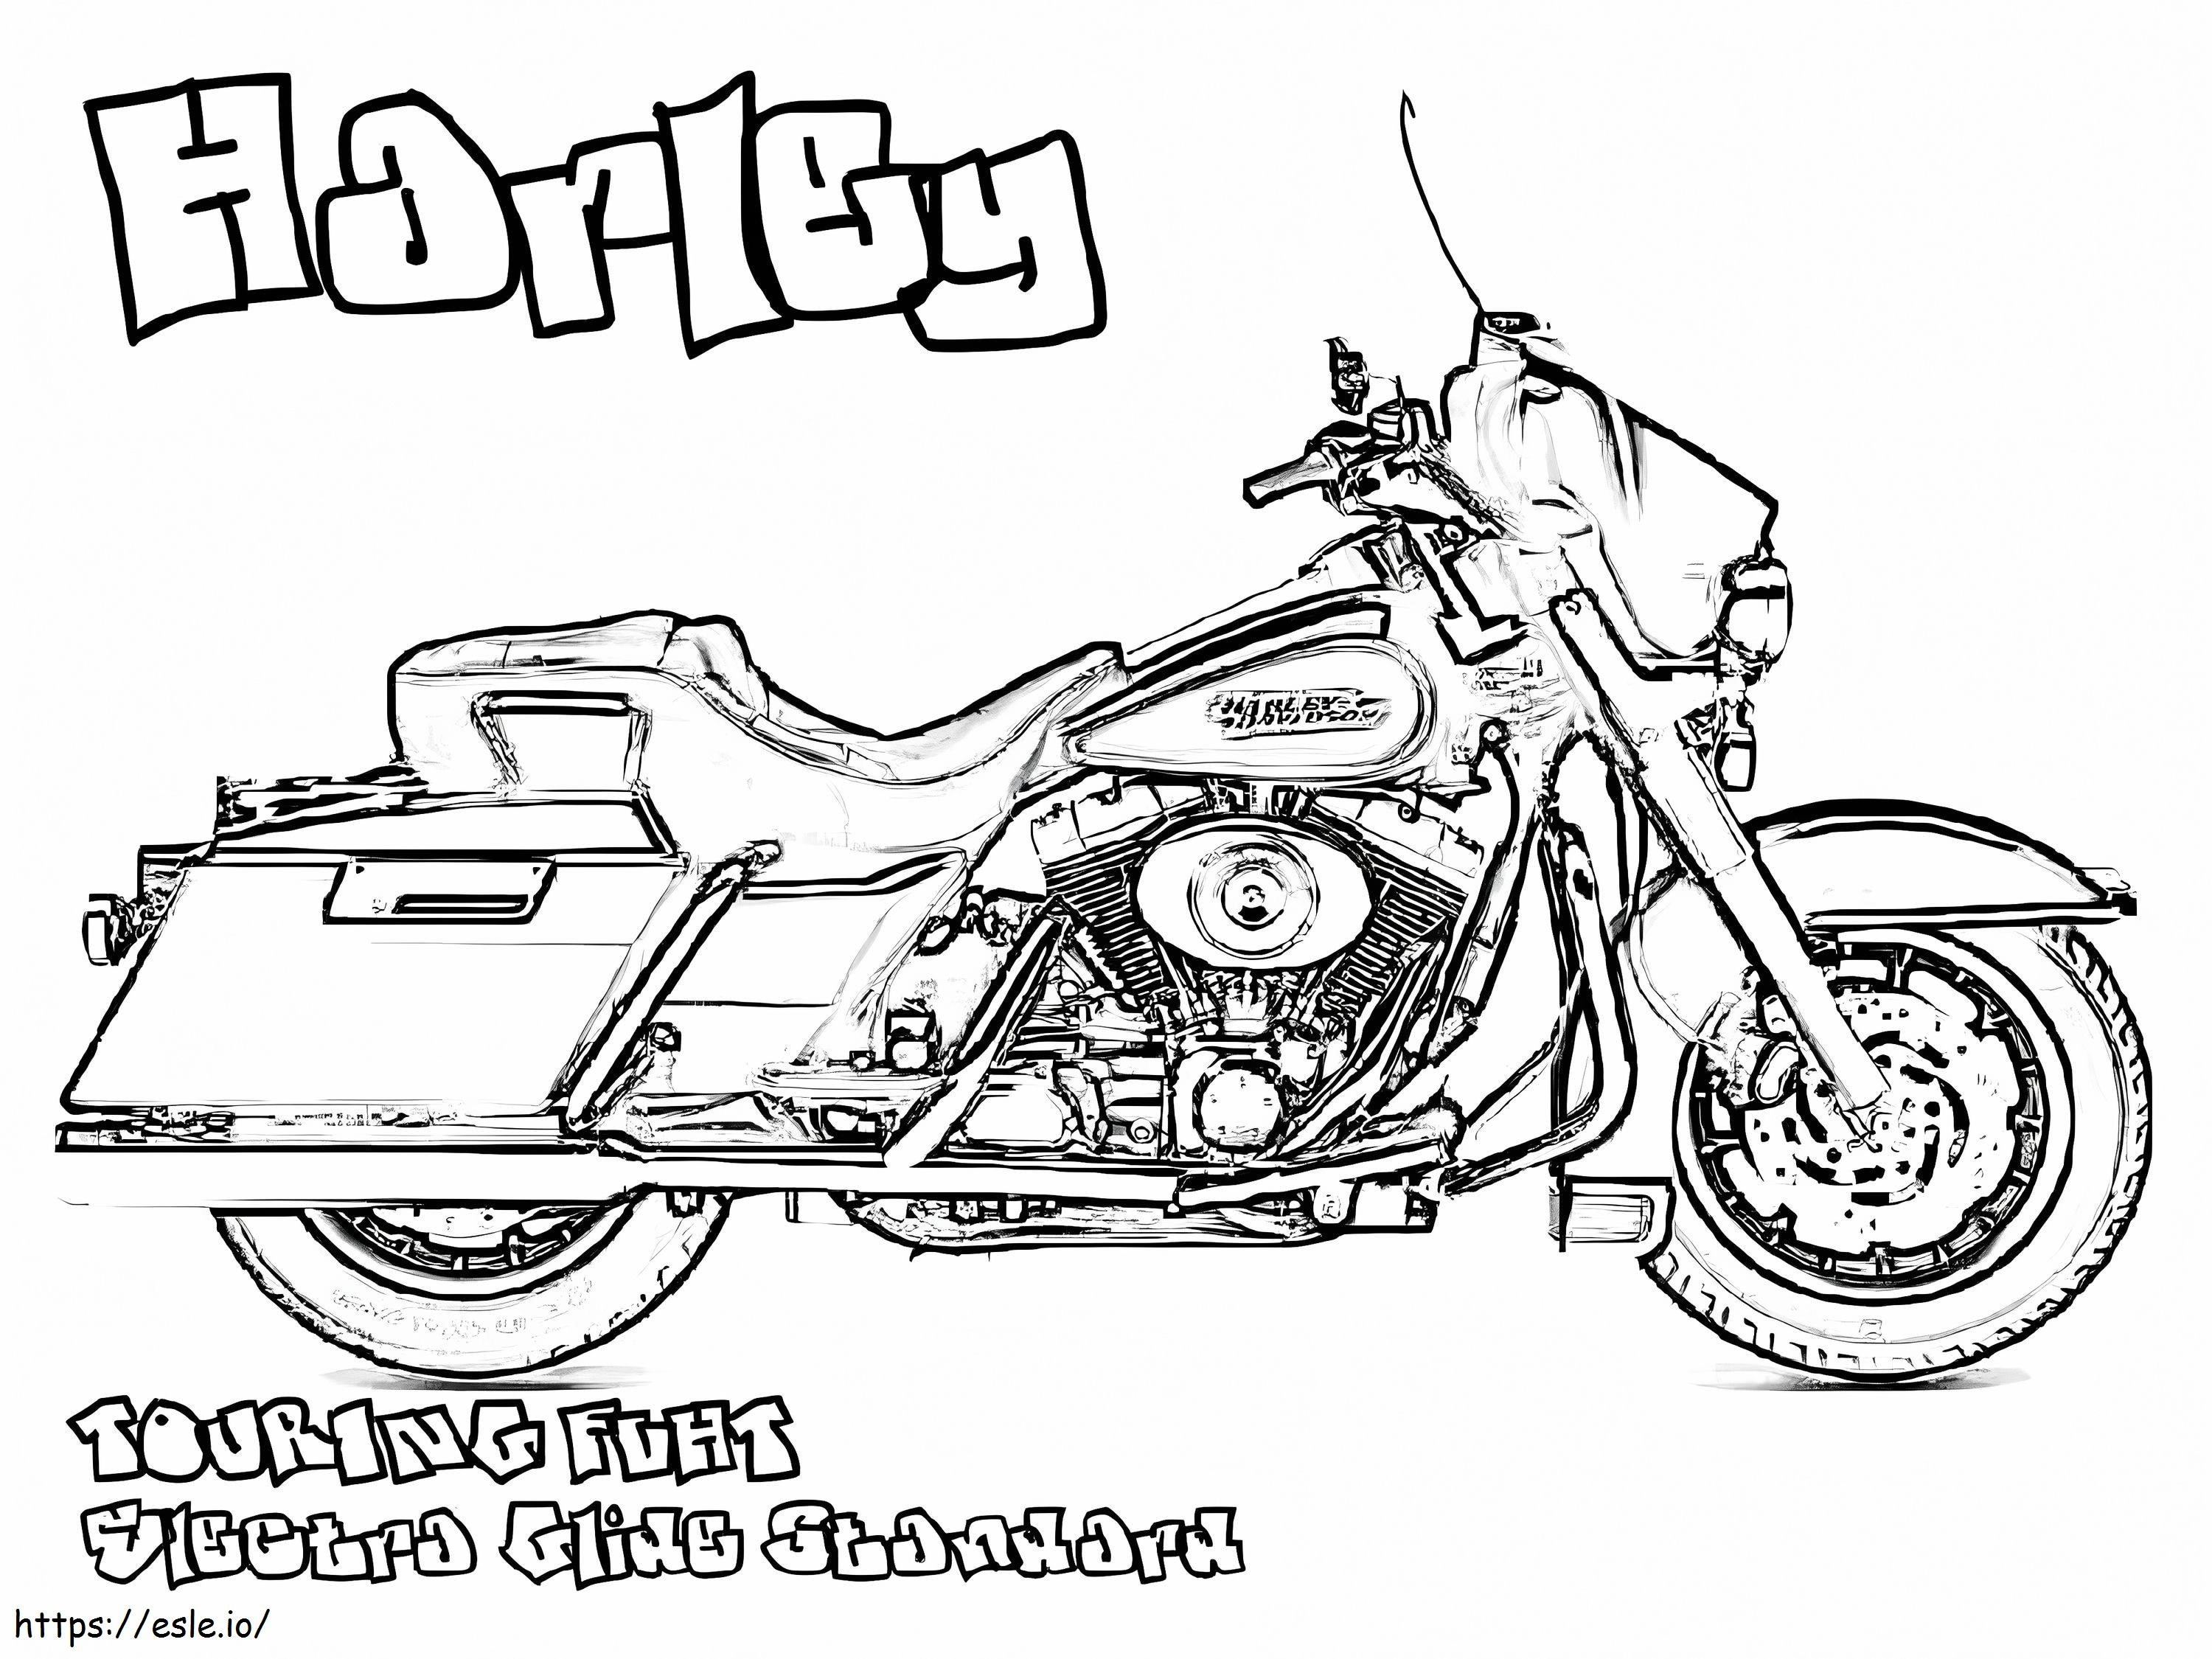 Harley Davidson'dan Renkli boyama